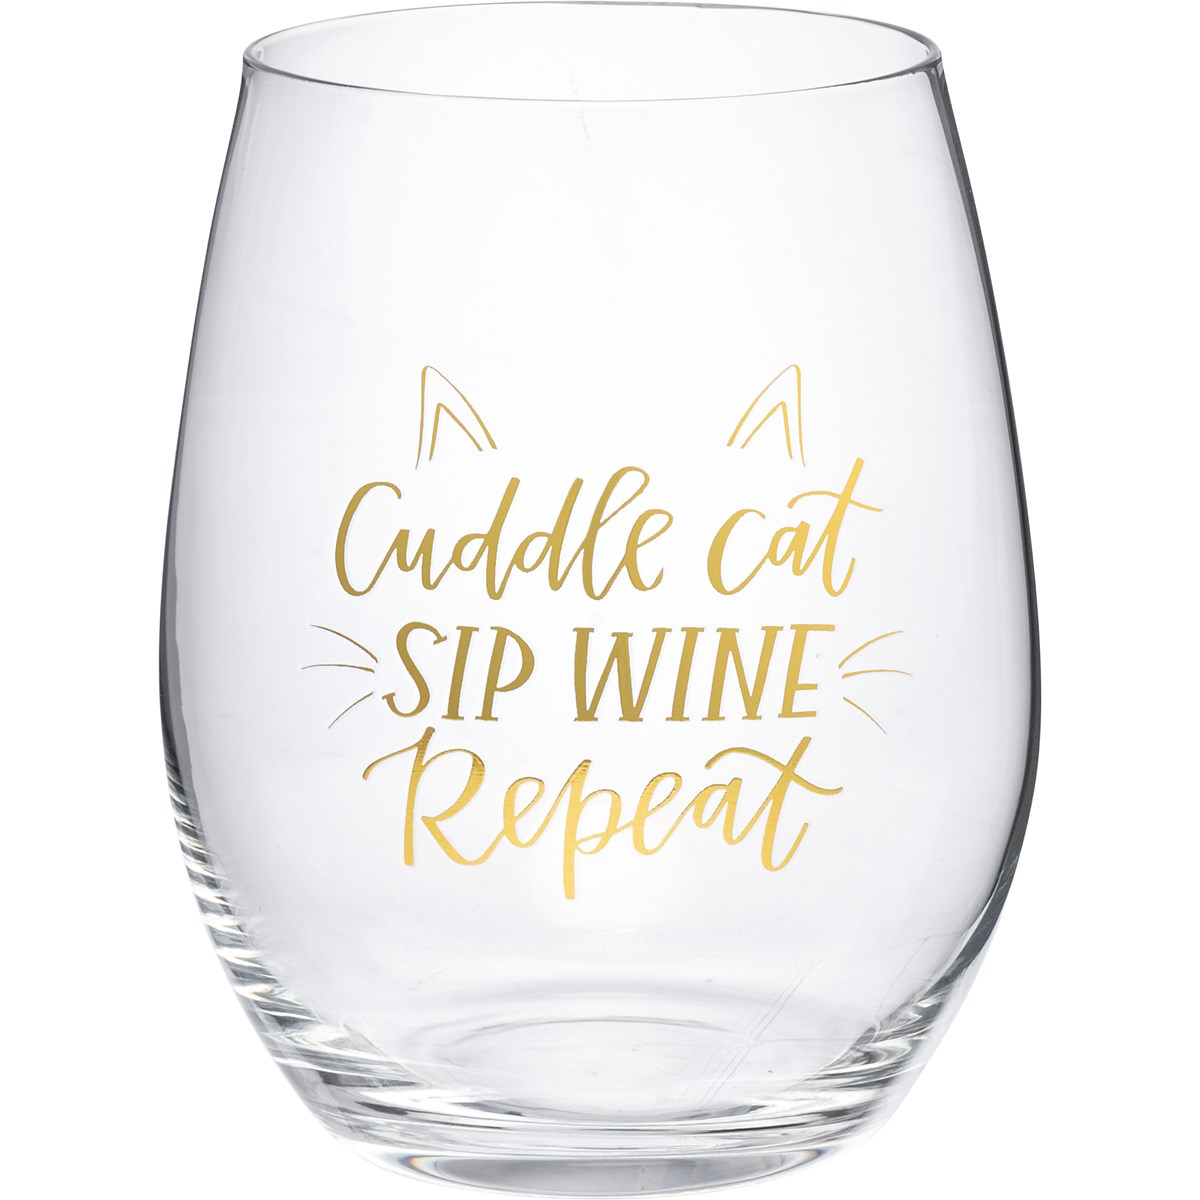 Cuddle Cat Sip Wine Repeat Wine Glass - Glass